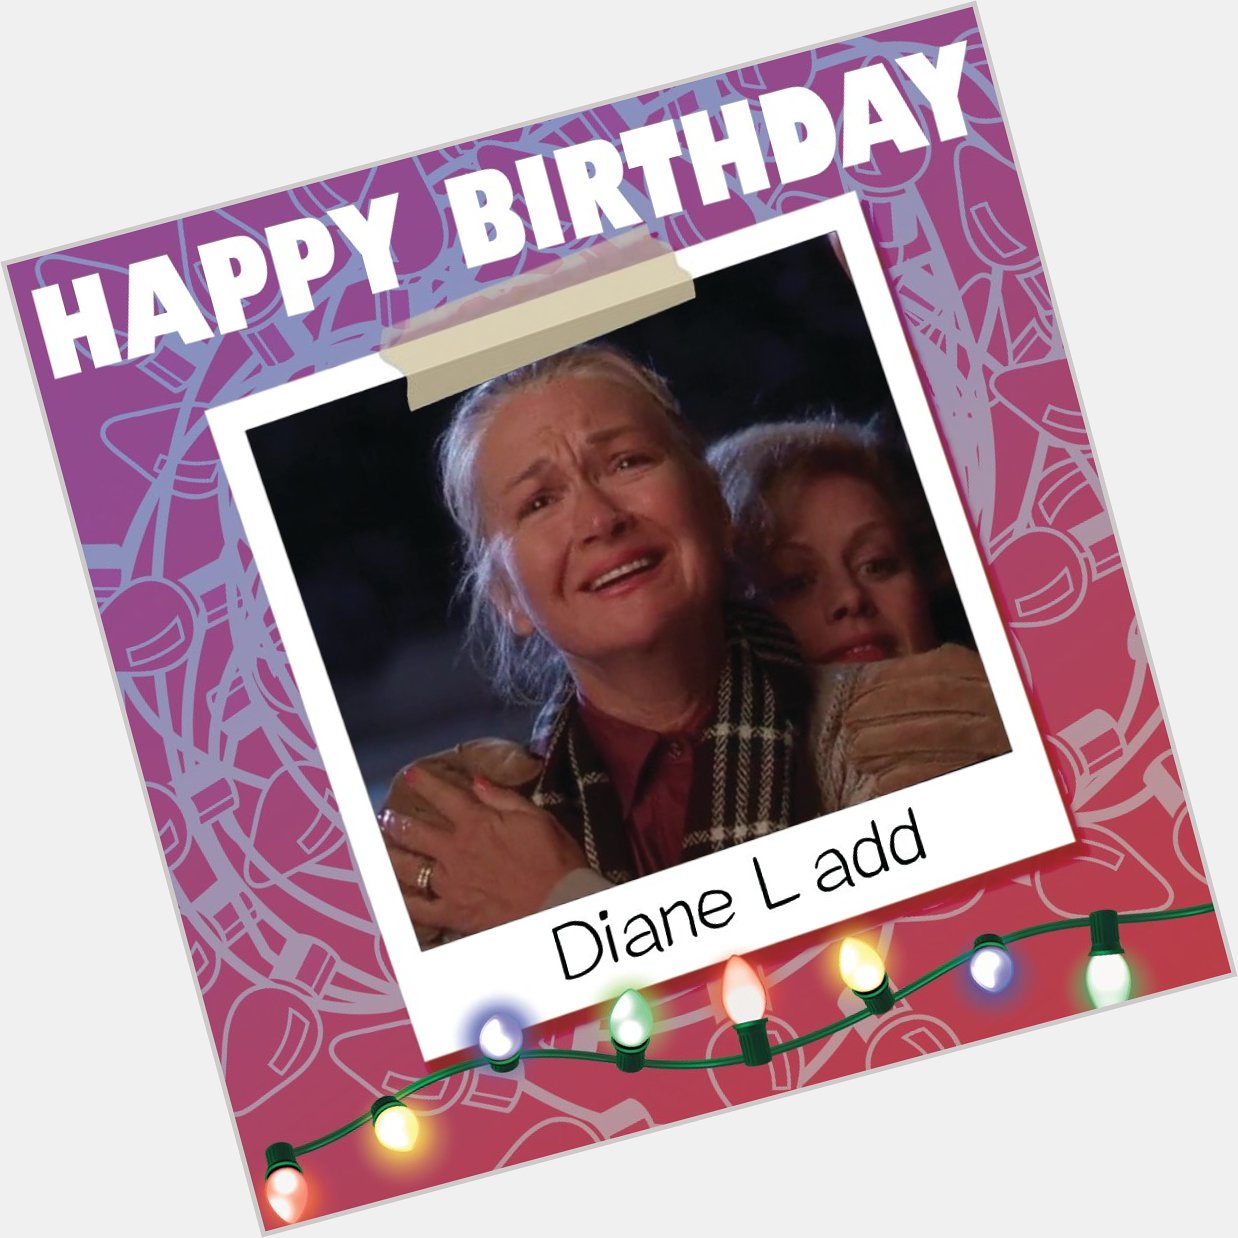 Happy Birthday Diane Ladd!!

Shop Online:
 